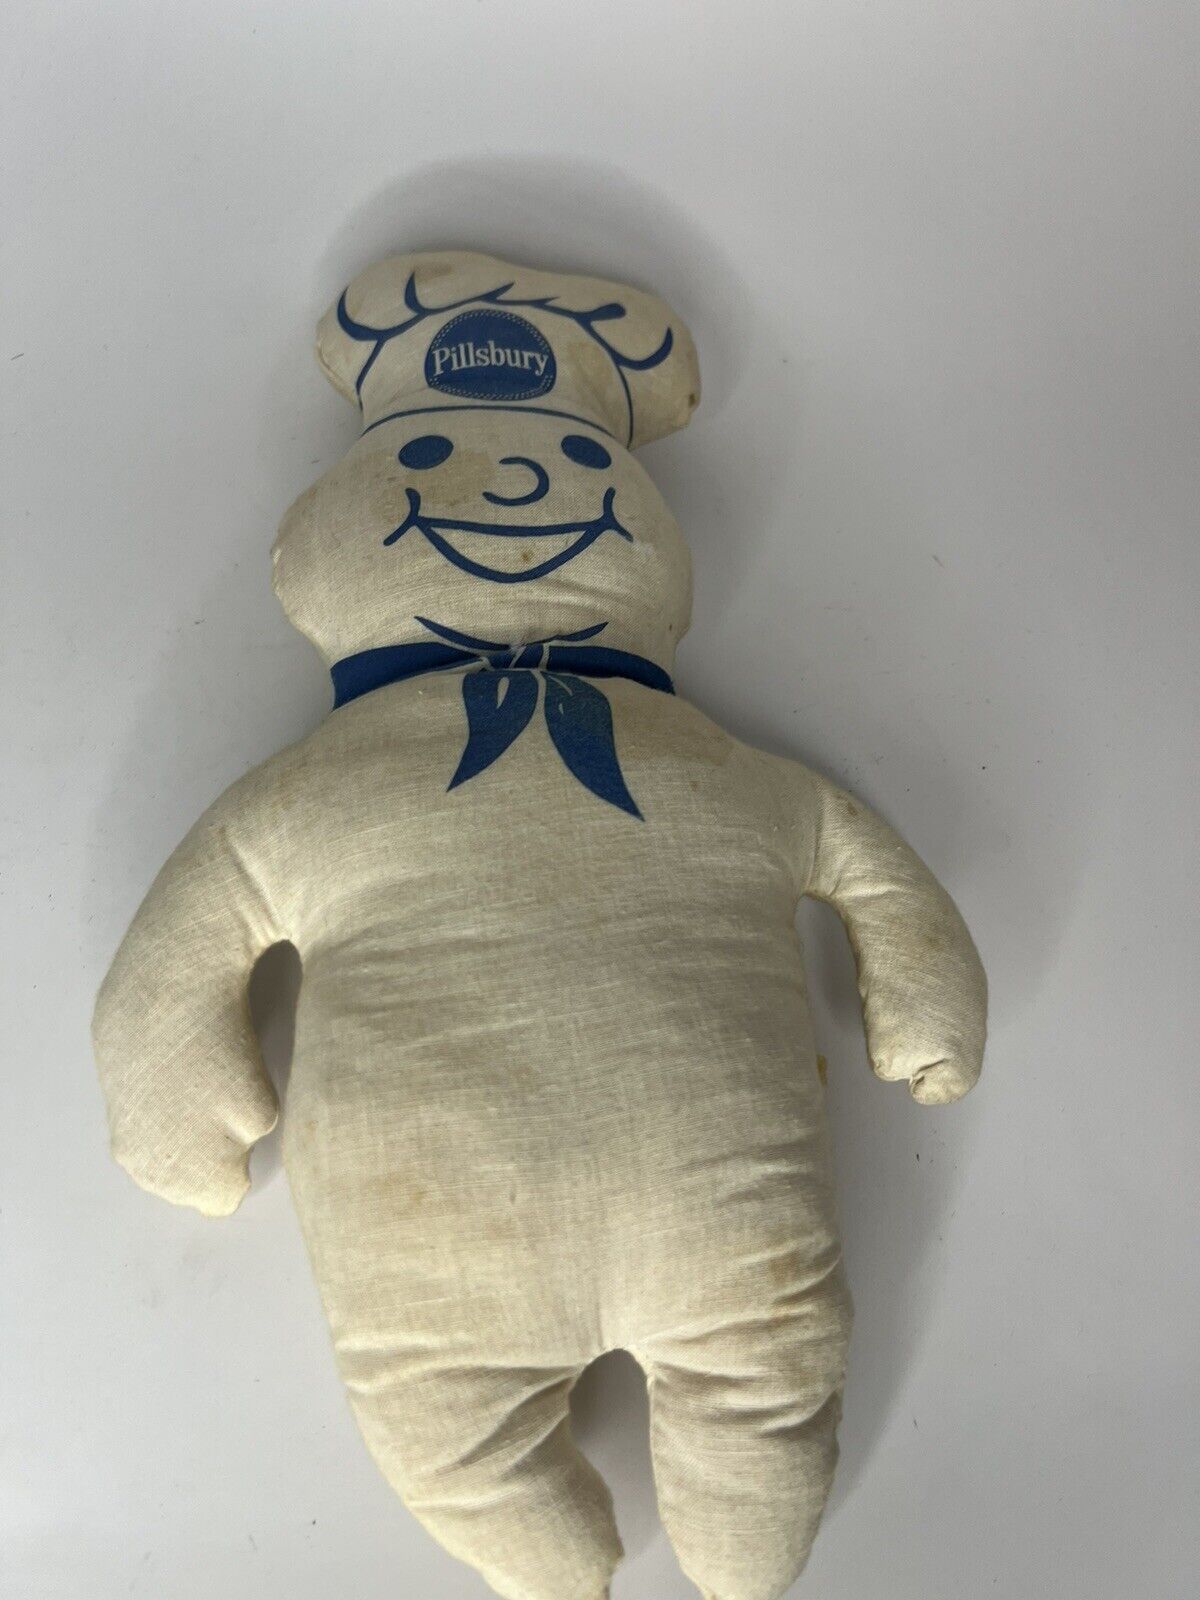 Vintage 1960s Pillsbury Doughboy Plush Stuffed Animal Toy